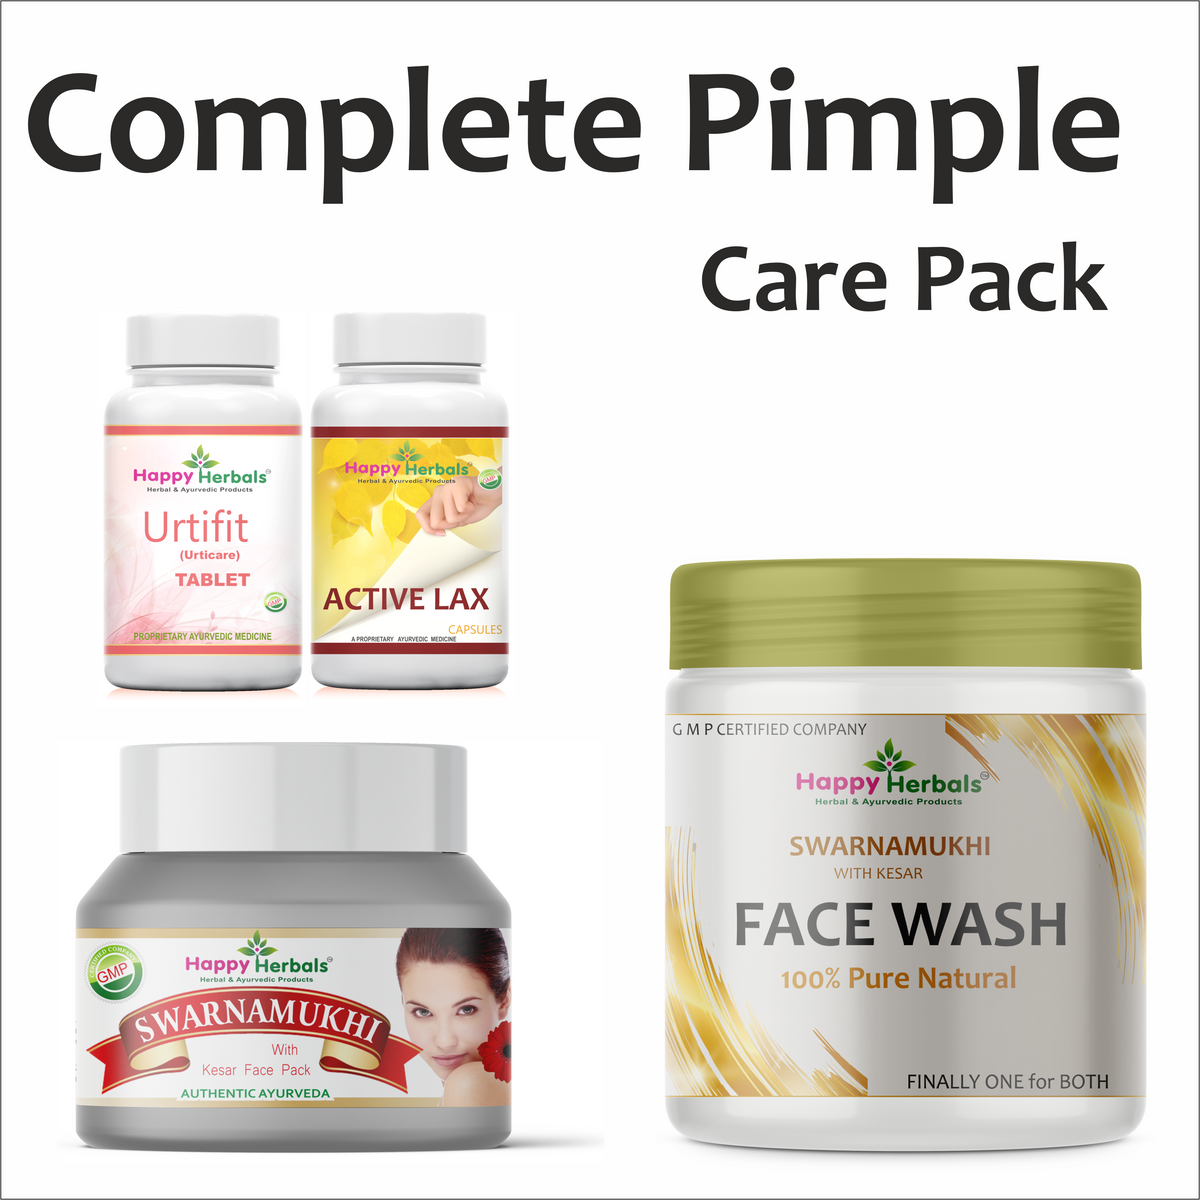 Pimple Care Pack